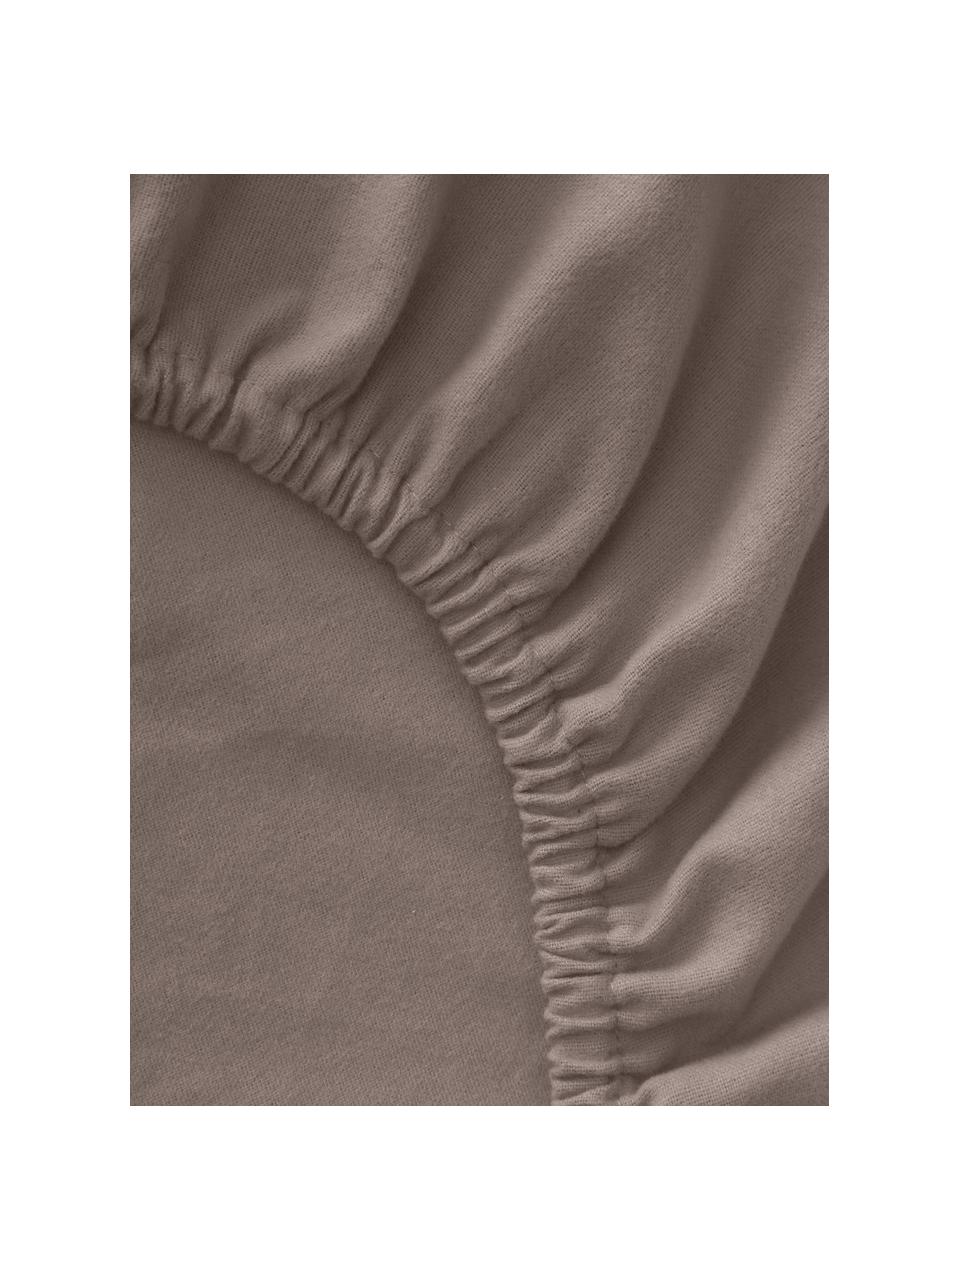 Sábana bajera cubrecolchón de franela Biba, Gris pardo, Cama 200 cm (200 x 200 x 15 cm)